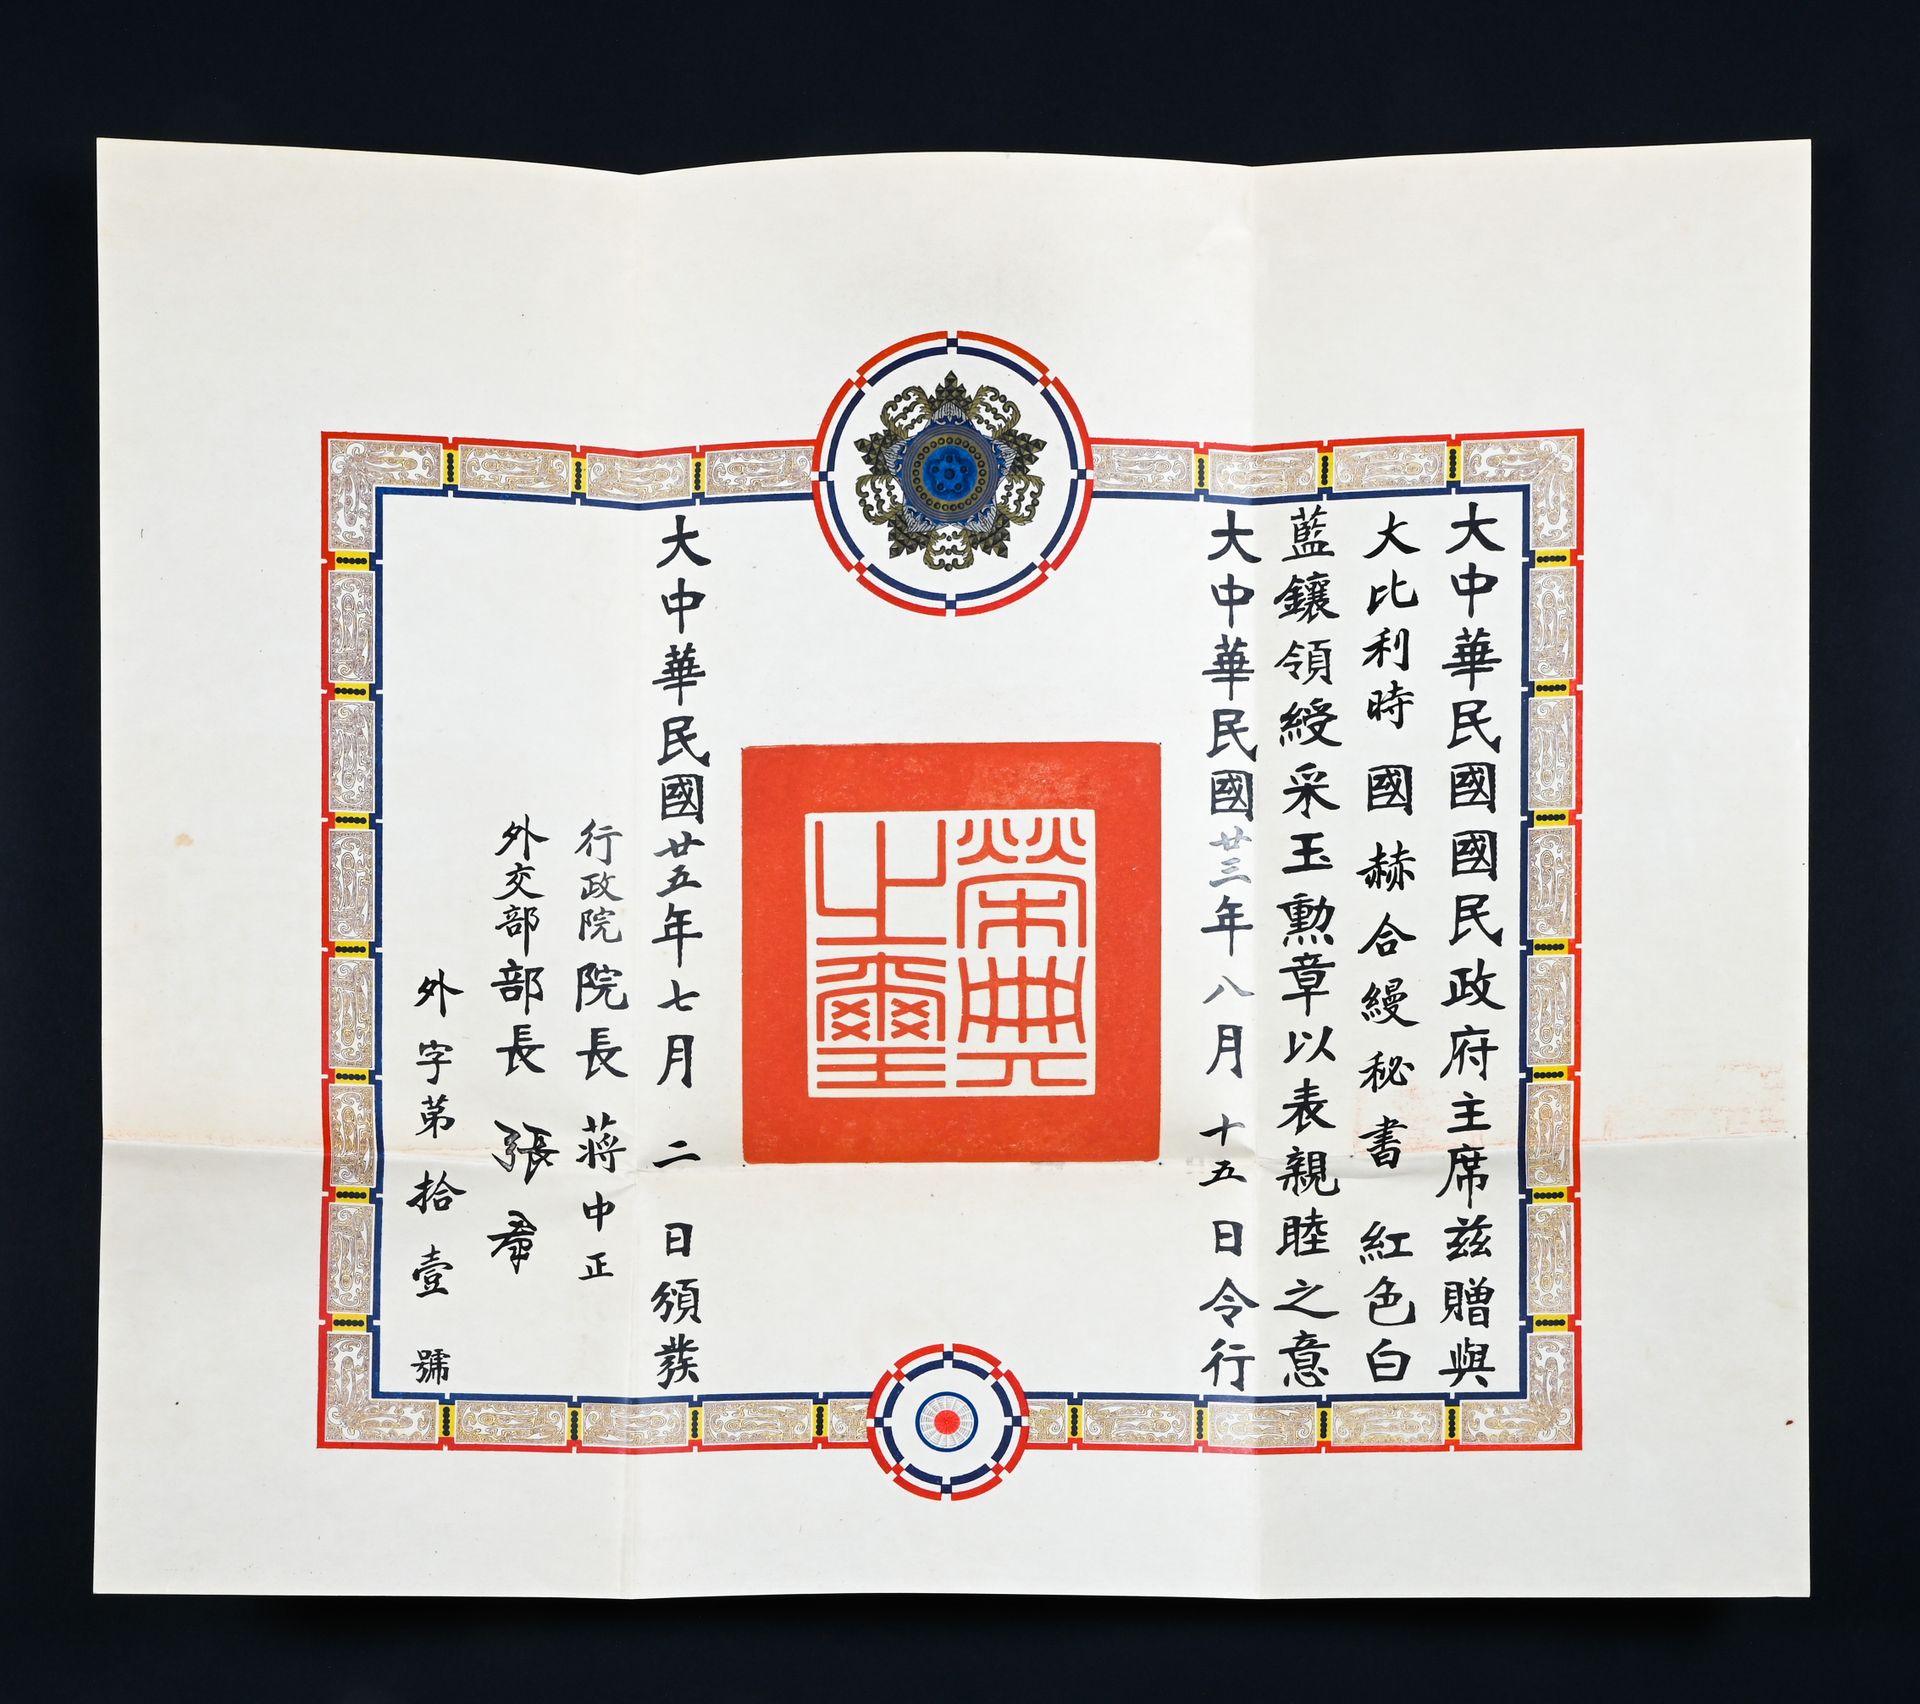 CHINE, CINA,

Ordine della Giada splendente,



Fondata nel 1933 da Chang Kai Sh&hellip;